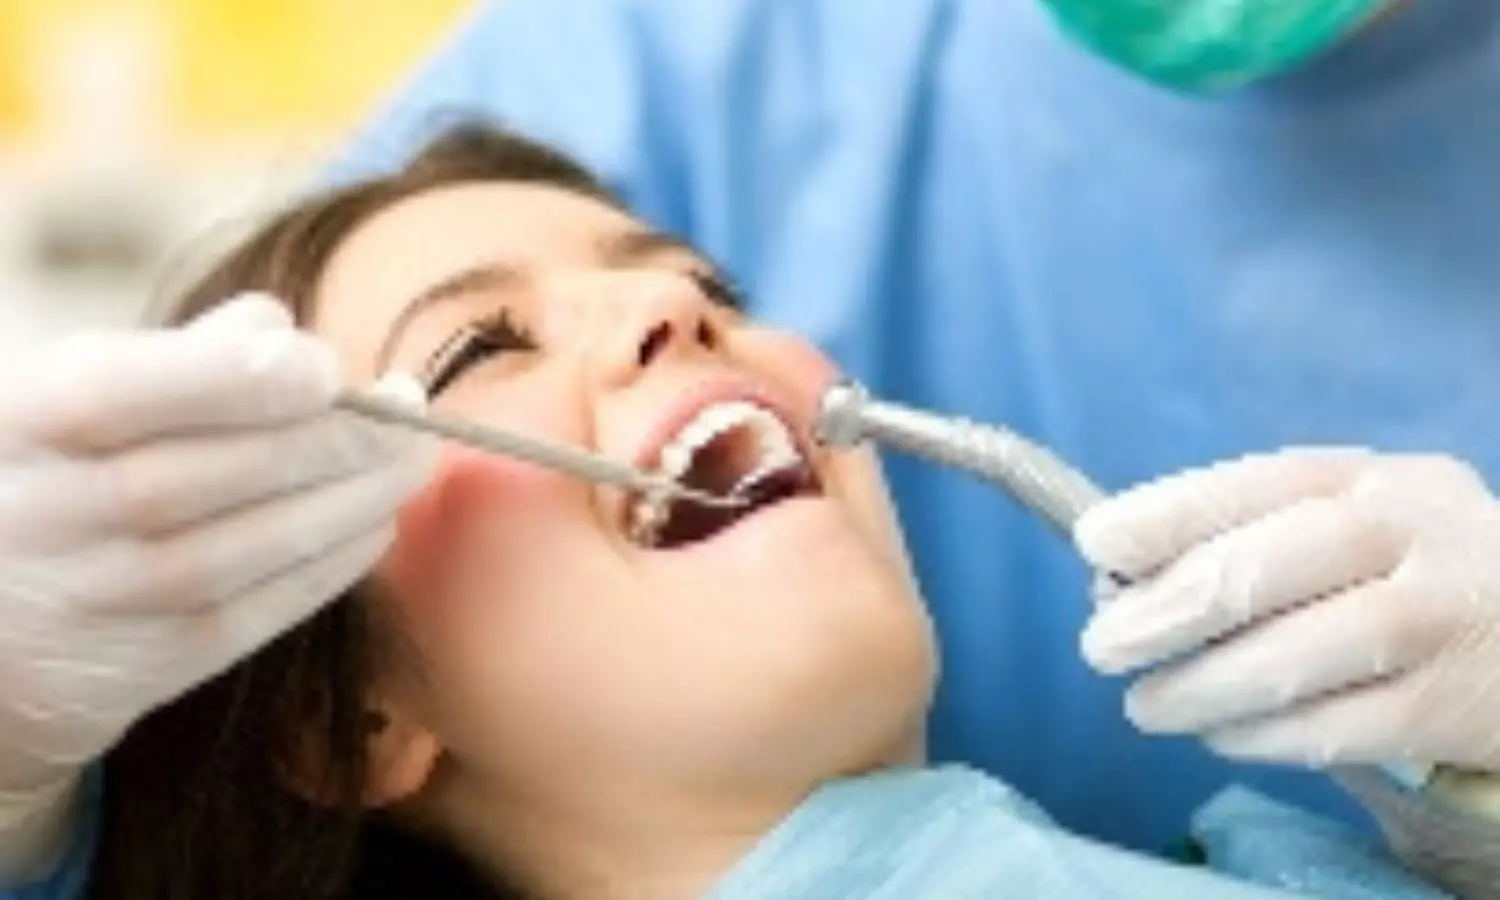 Teeth care tips